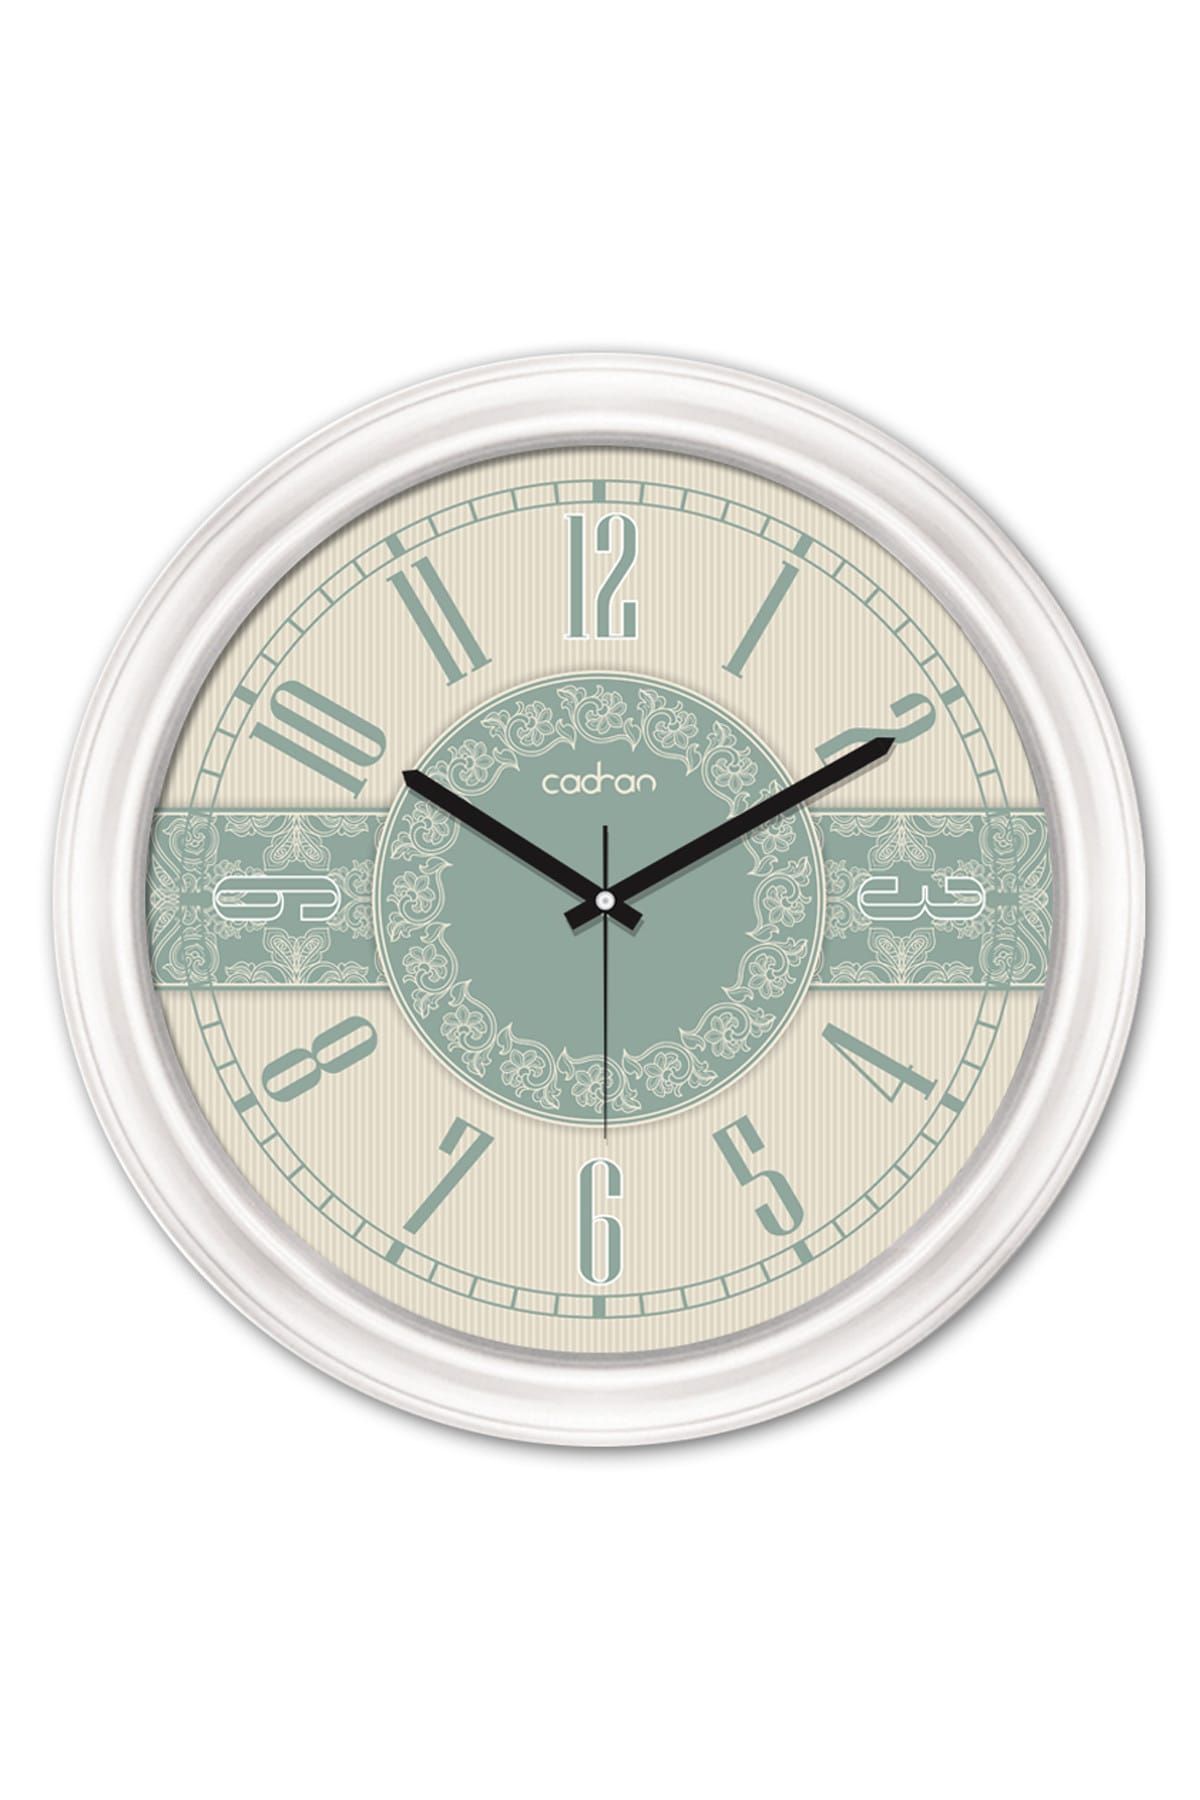 Cadran Fashion Clock Dekoratif Camlı Duvar Saati CDR197